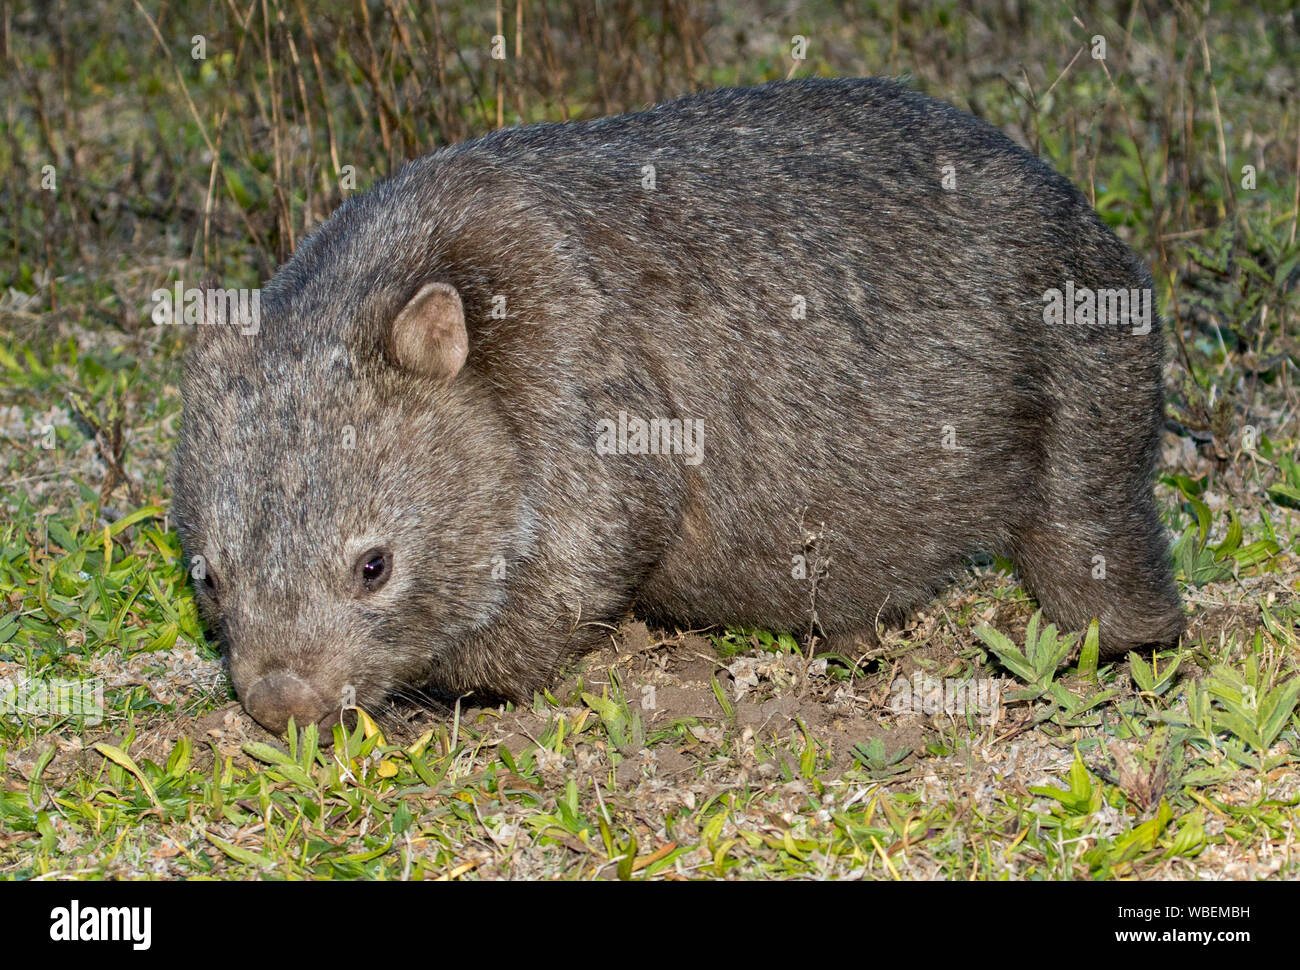 Wombat australian mammals marsupial hi-res stock photography and images -  Alamy